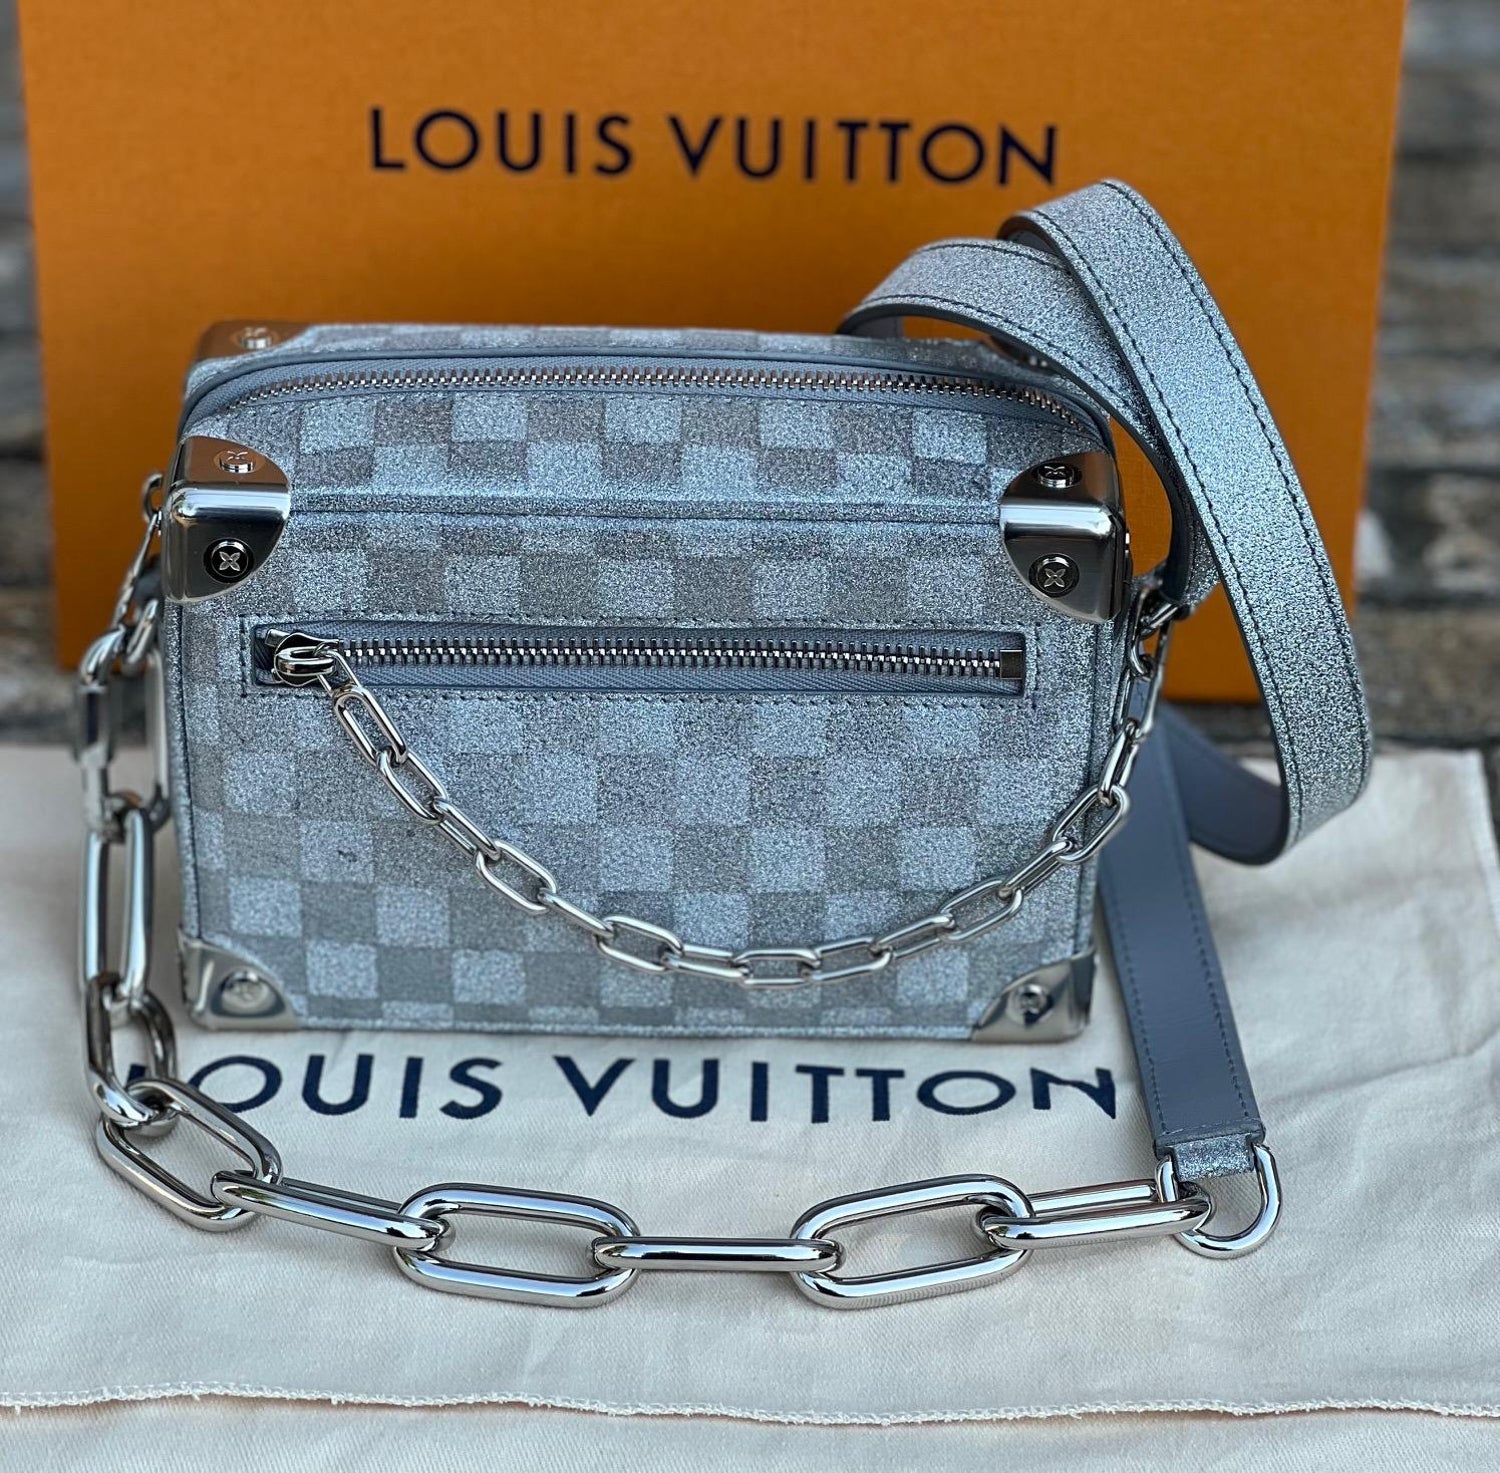 Louis Vuitton - Authenticated Soft Trunk Mini Bag - Crocodile White Crocodile For Man, Very Good condition